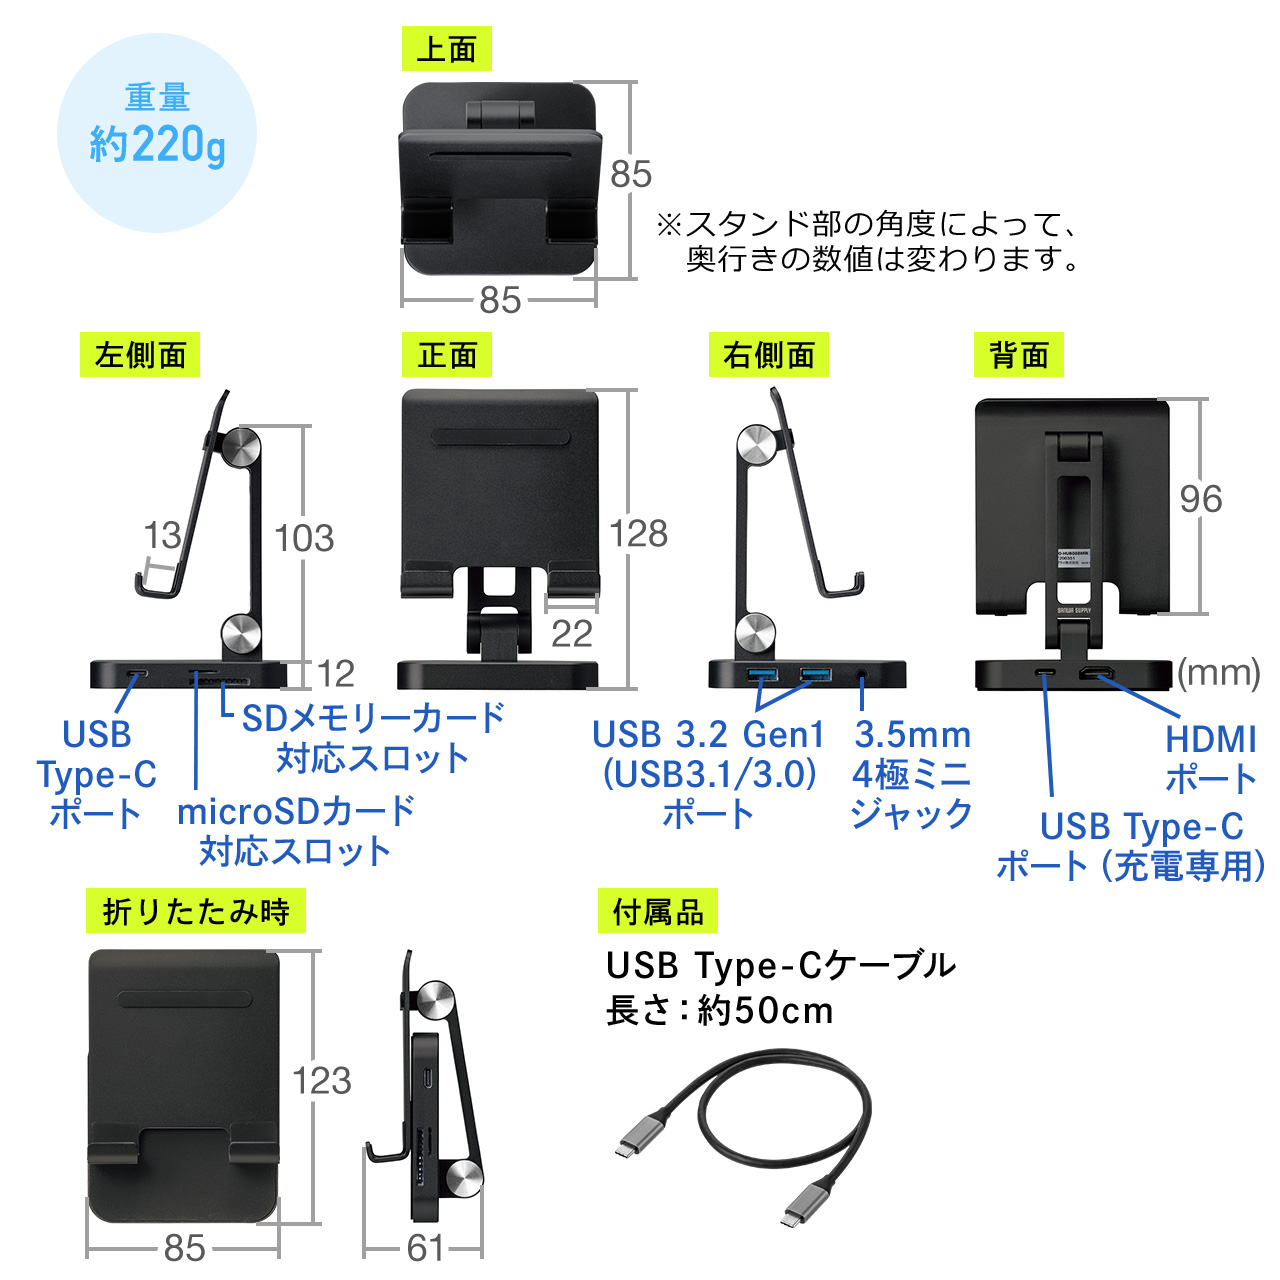 USB Type-C hbLOXe[V X}zE^ubgX^h^Cv PD/60WΉ 4KΉ 7in1 HDMI Type-C USB3.0~2 SD/microSDJ[h 400-HUB088BKN